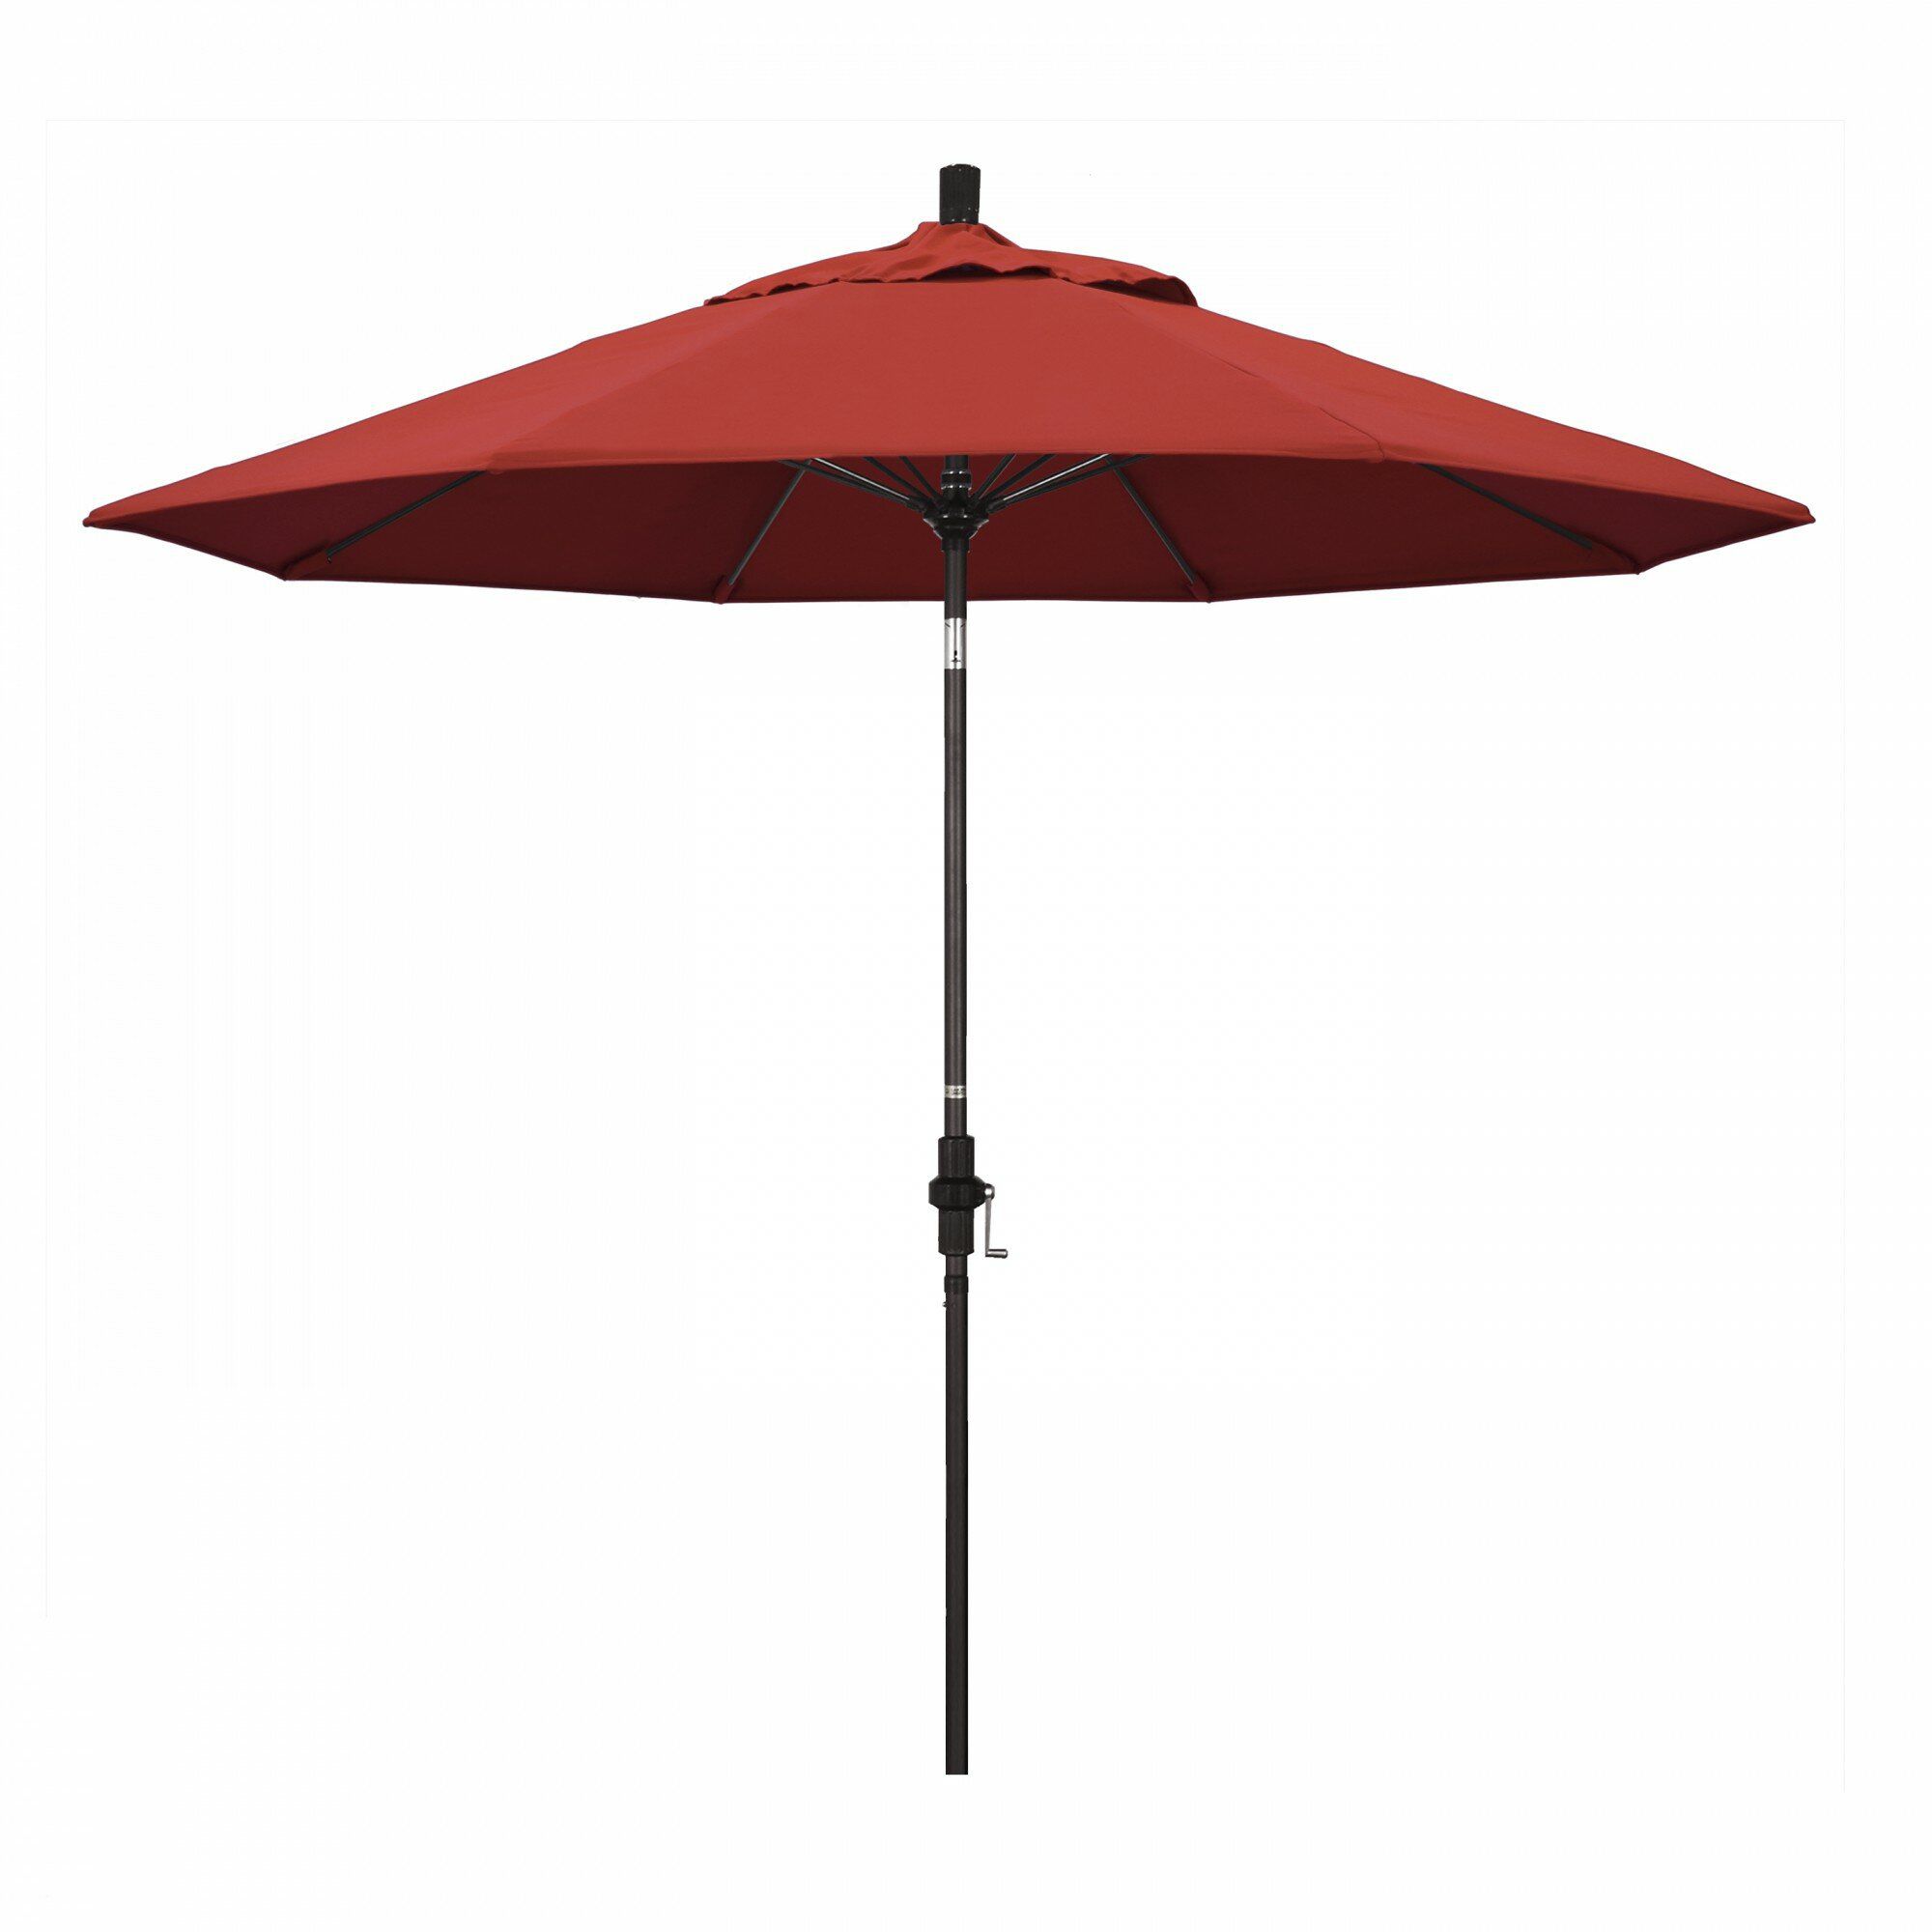 Arlmont & Co. Singleton 9' Market Sunbrella Umbrella